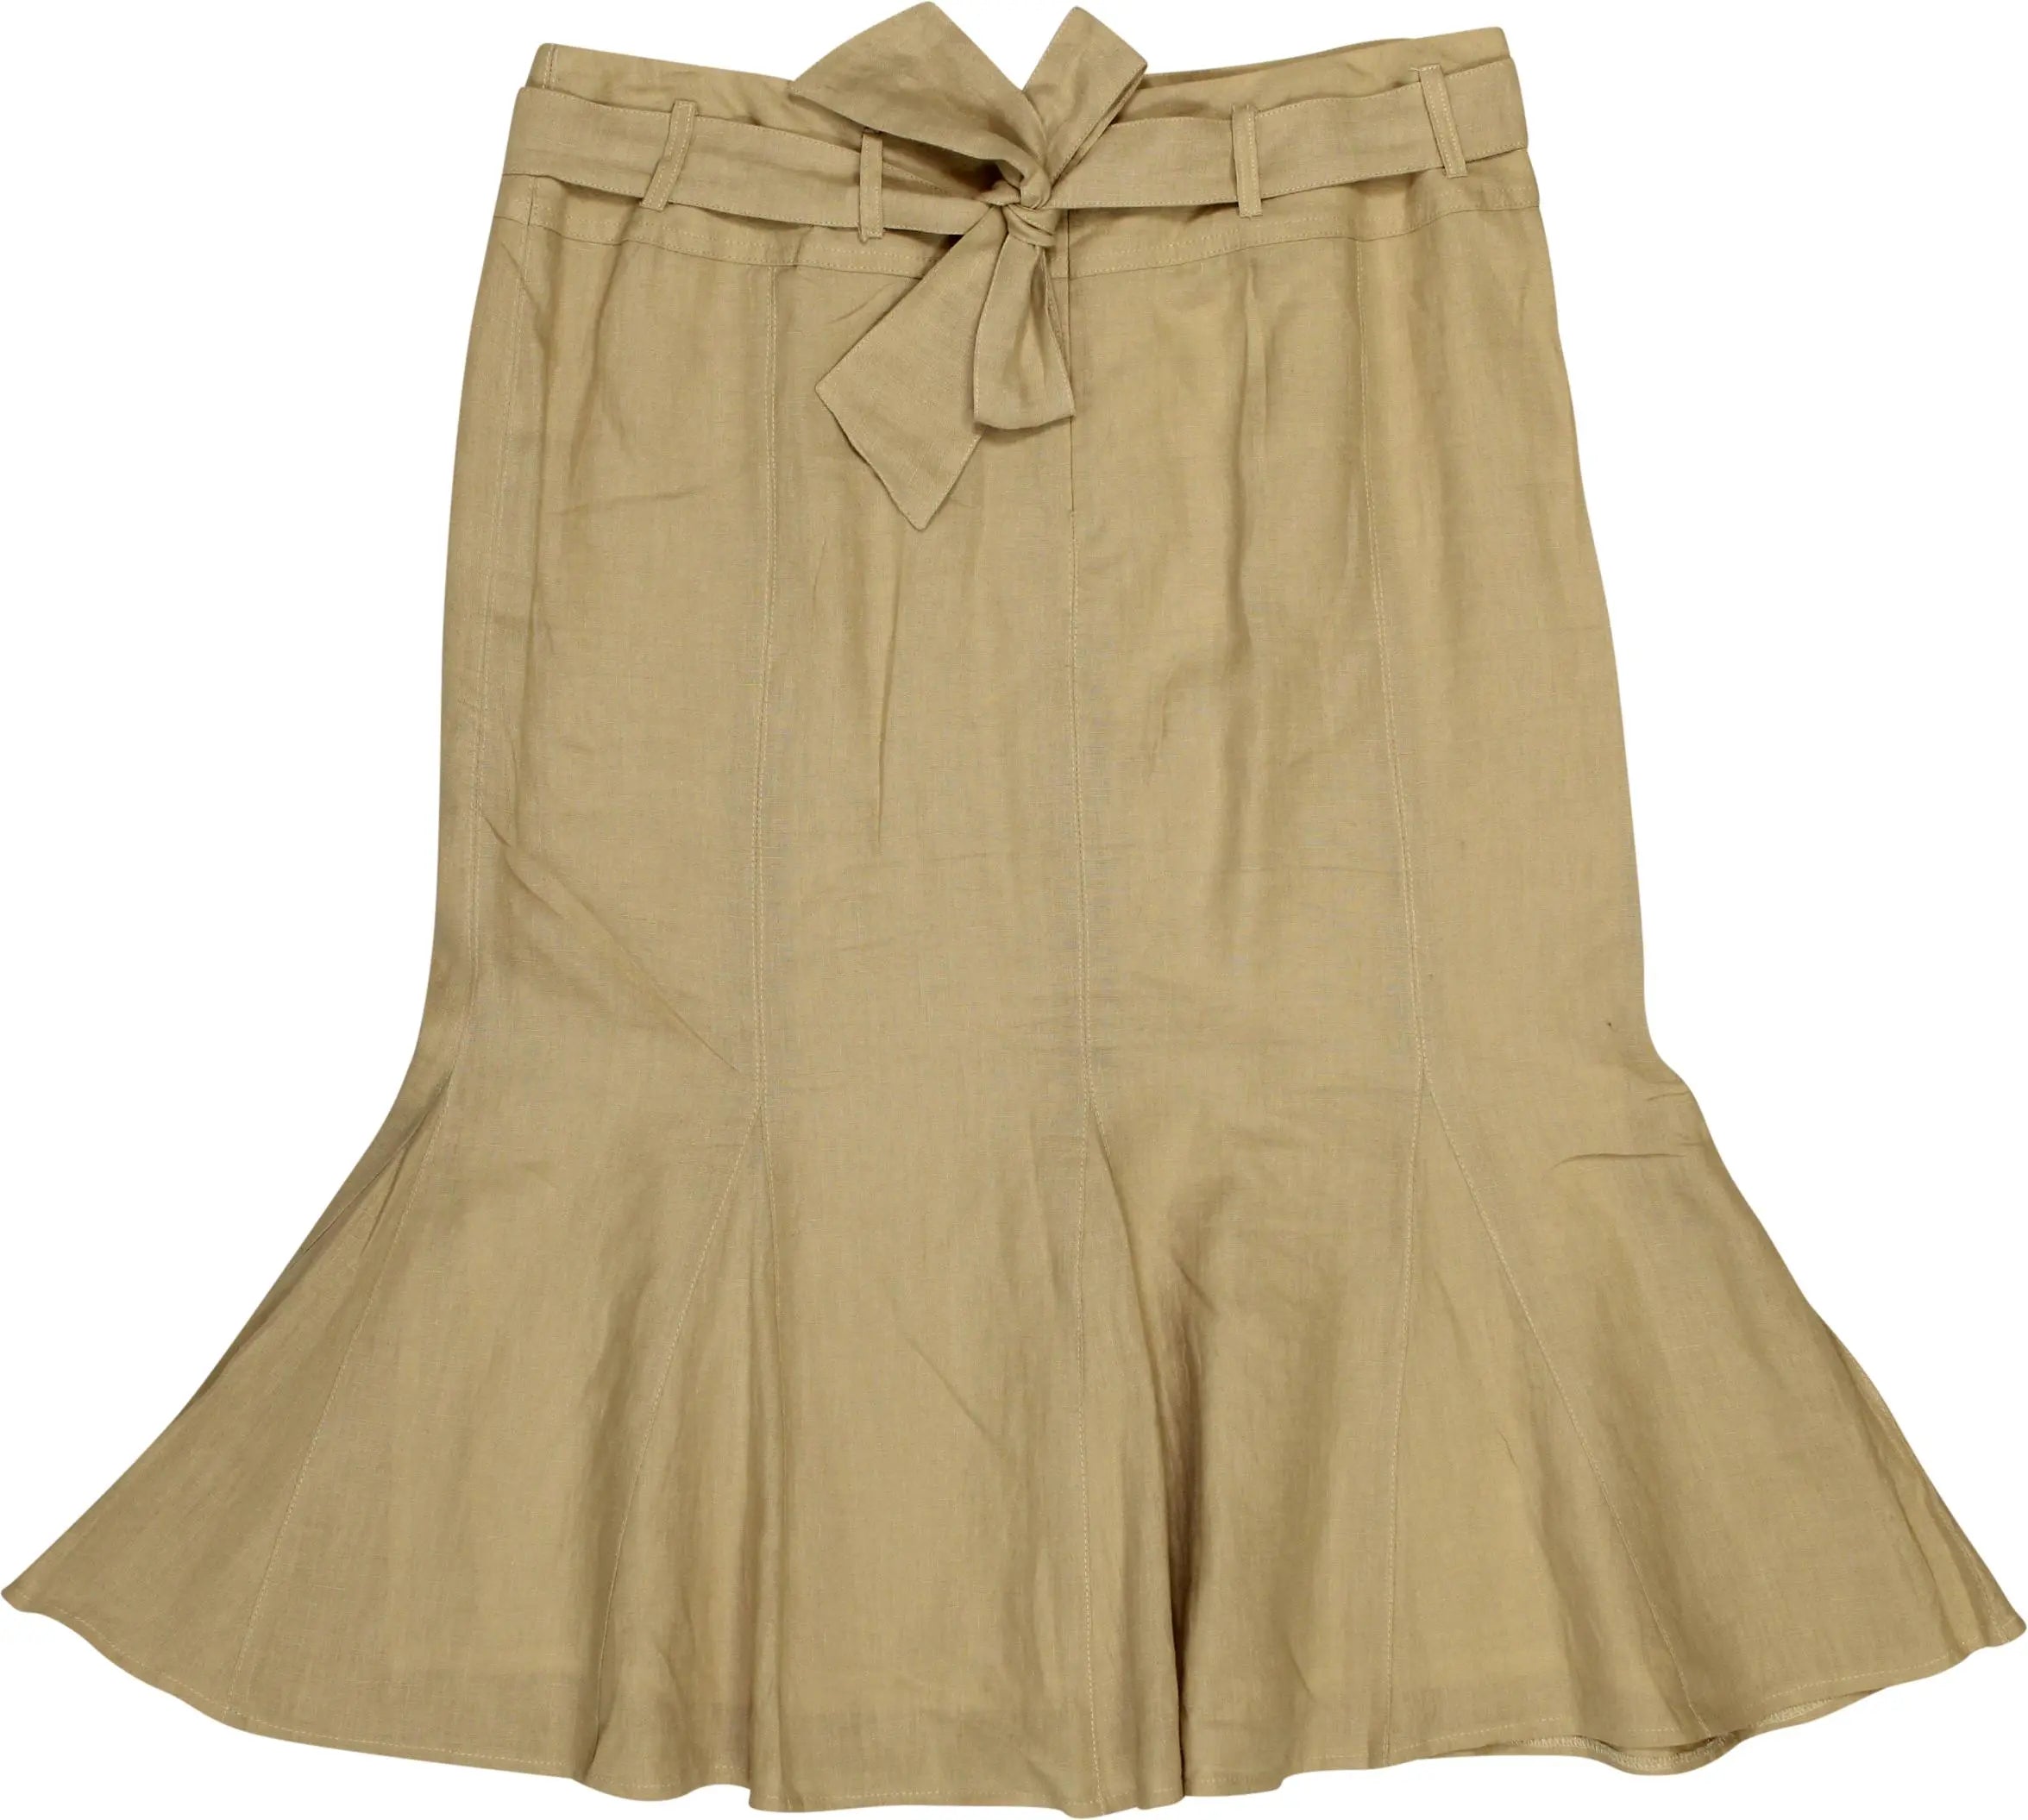 Sensa Donna - Linen Skirt- ThriftTale.com - Vintage and second handclothing